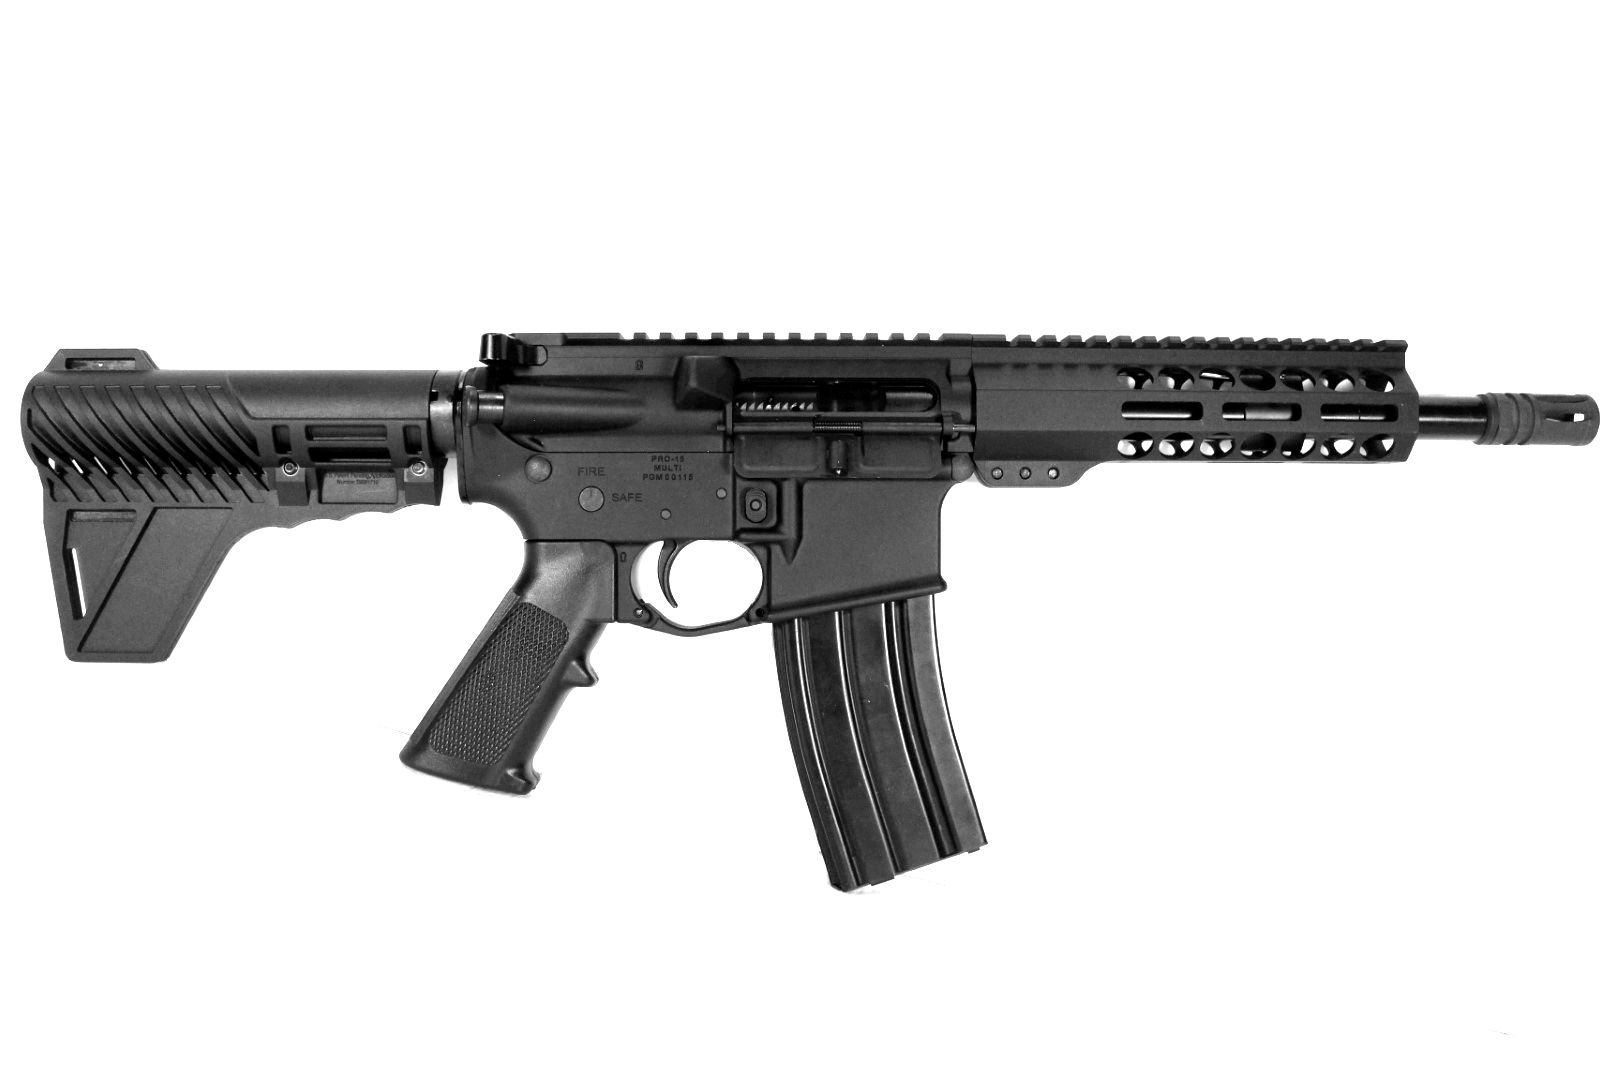 9 inch 300 Blackout AR-15 Pistol | USA MADE | Milspec or Better